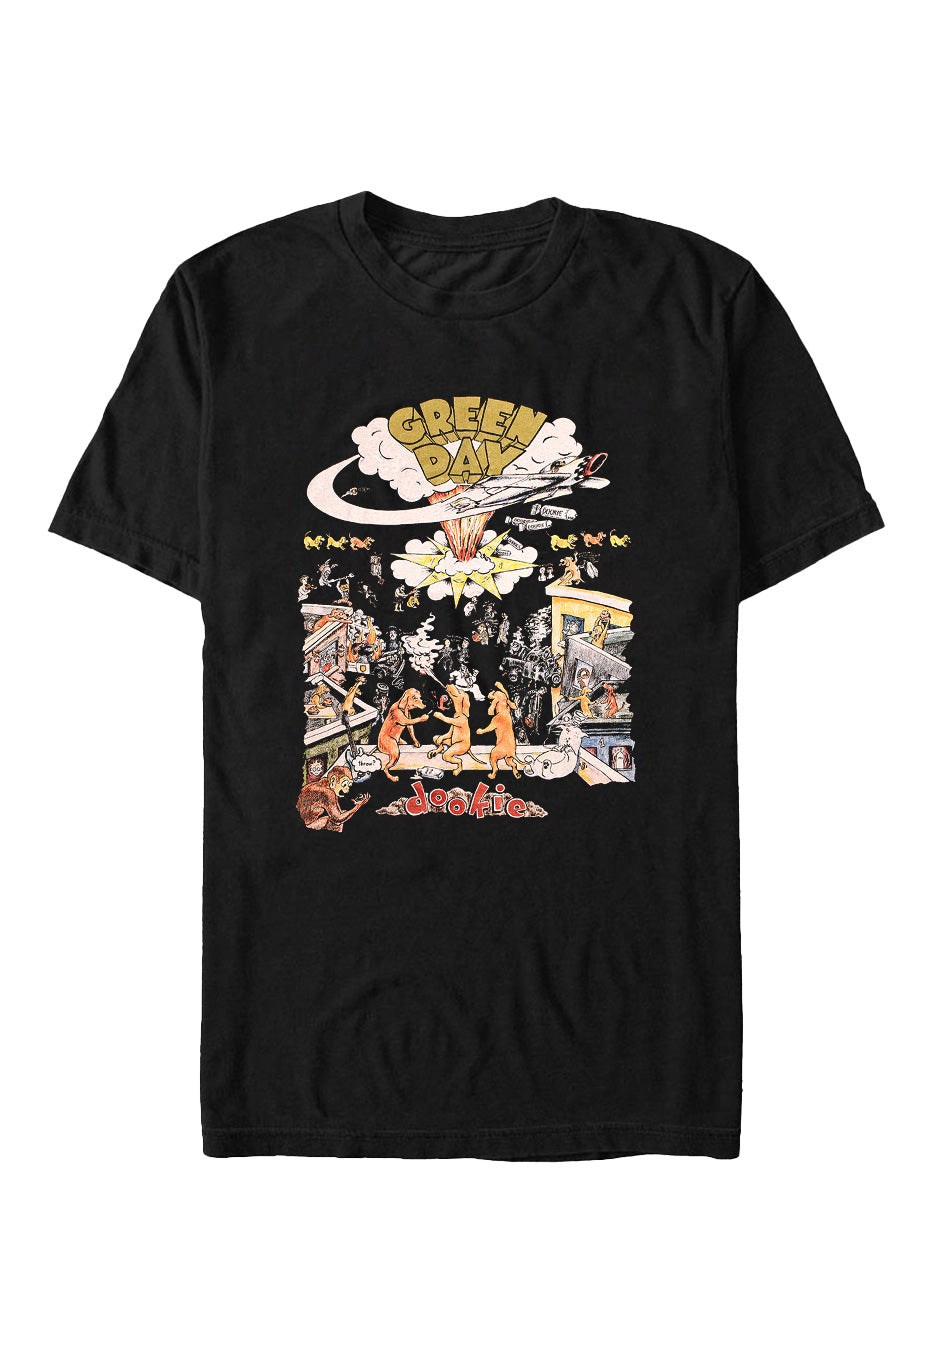 Green Day - 1994 Tour - T-Shirt